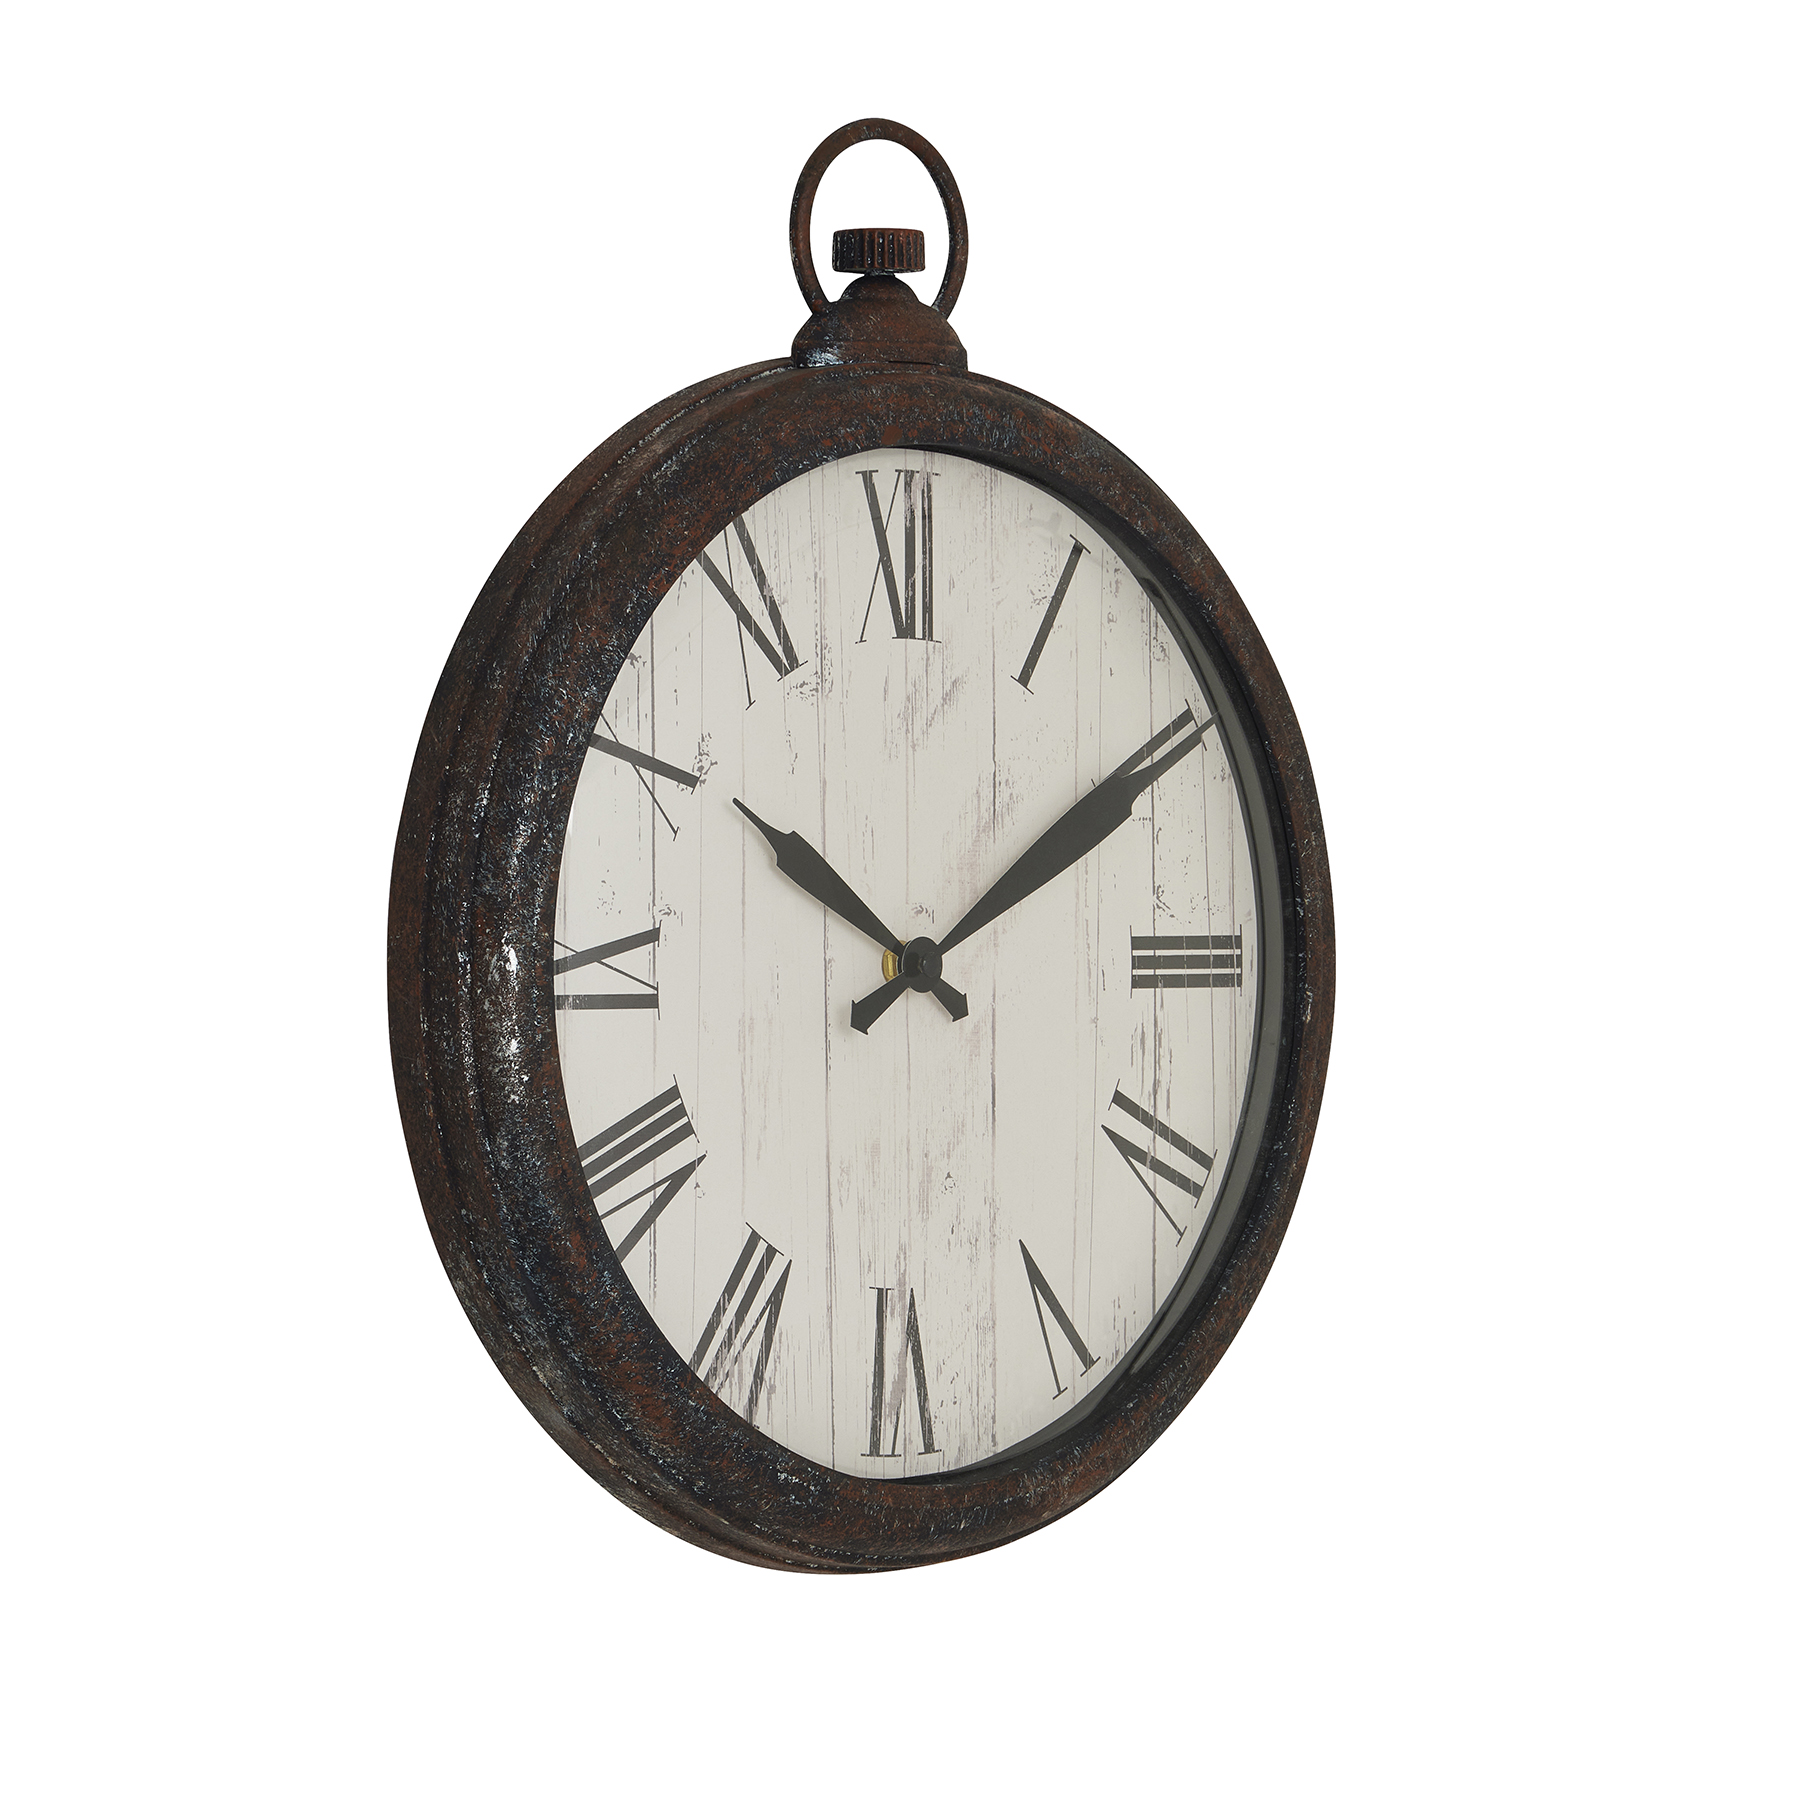 Rustic Pocket Watch Wall Clock - Image 1